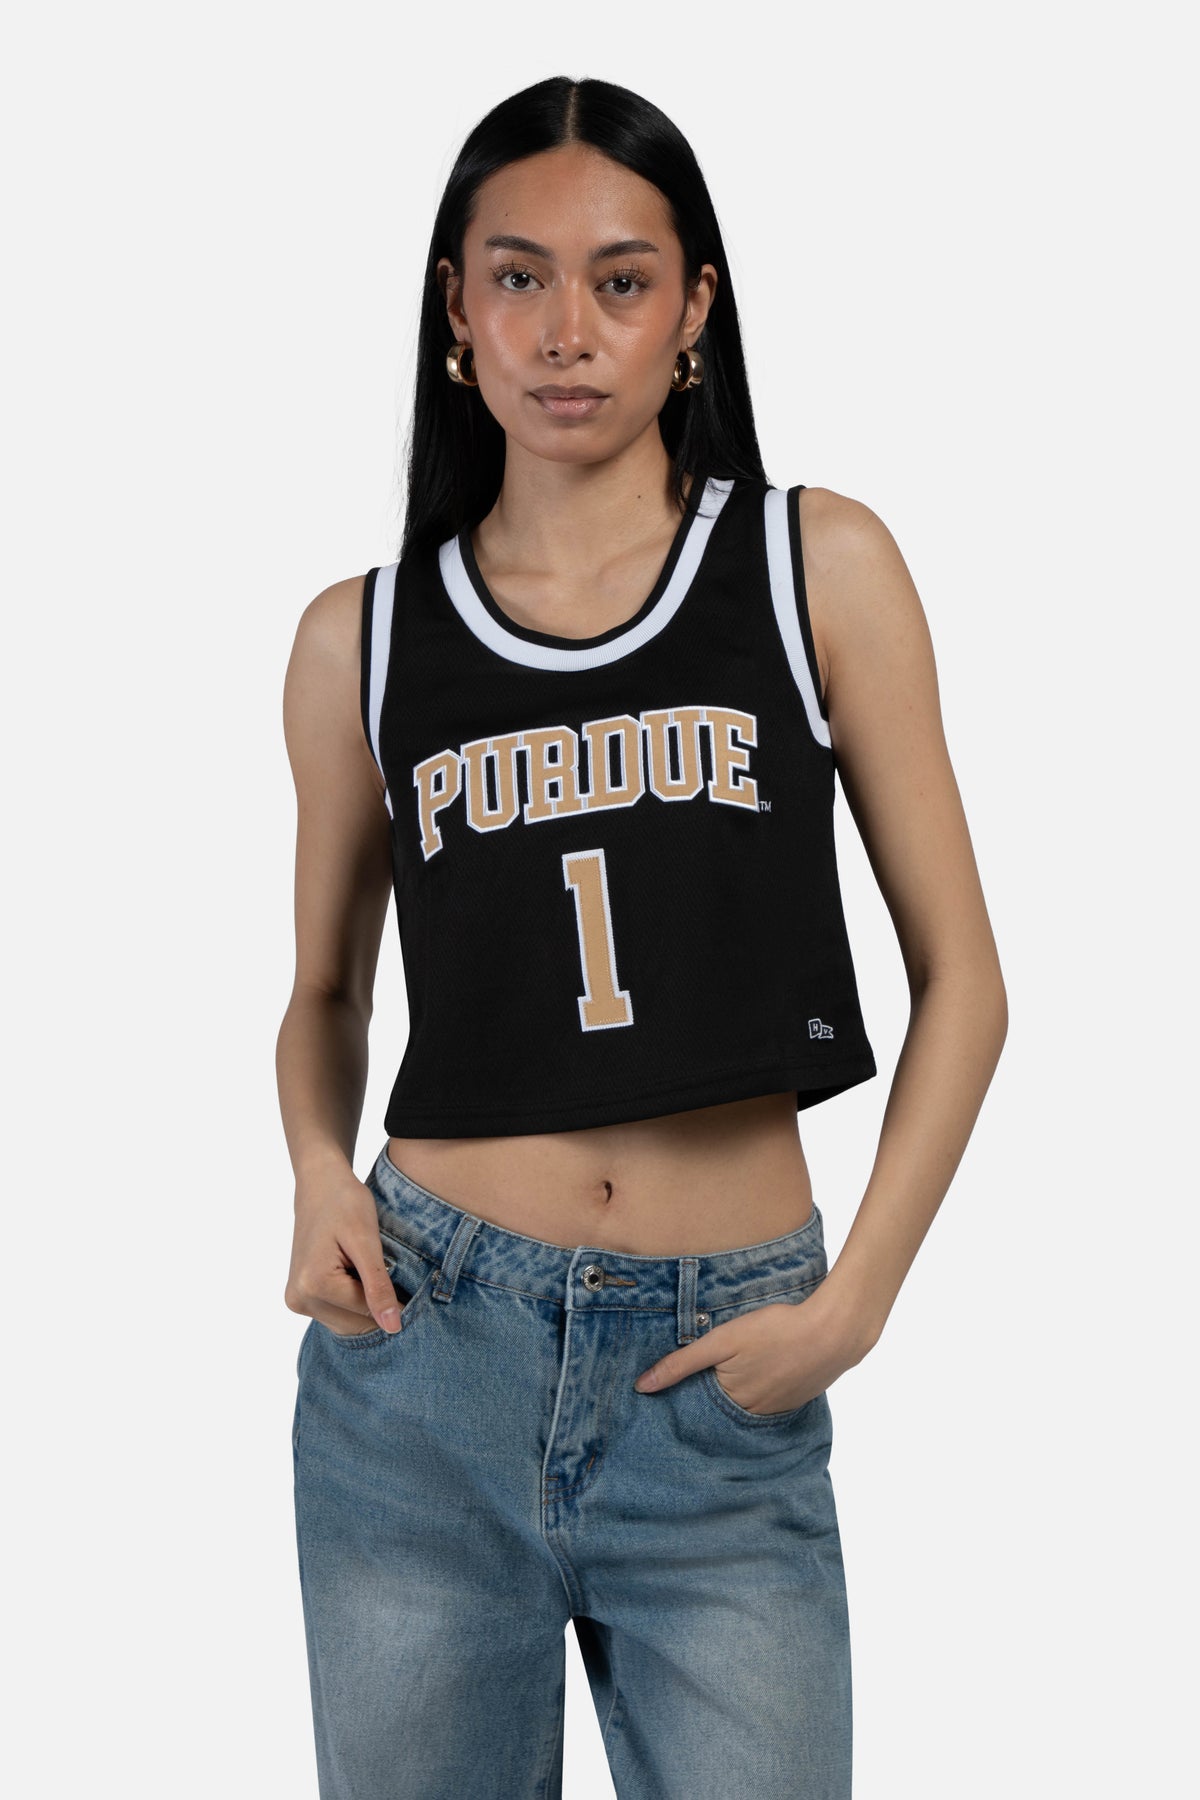 Purdue University Basketball Top